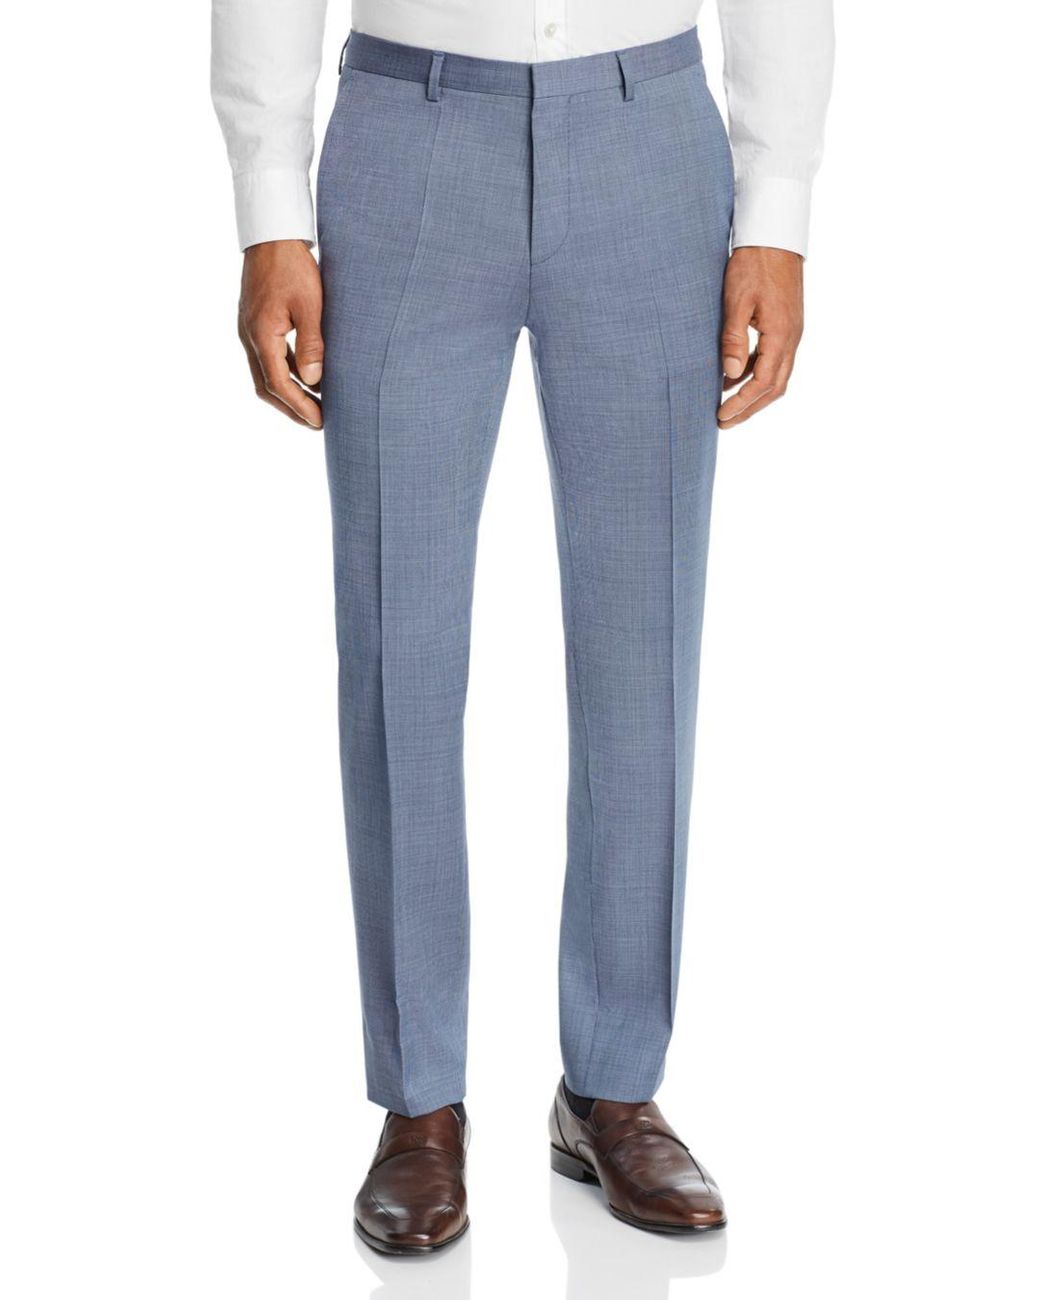 Lyst - HUGO Hets Micro-birdseye Slim Fit Suit Pants in Blue for Men